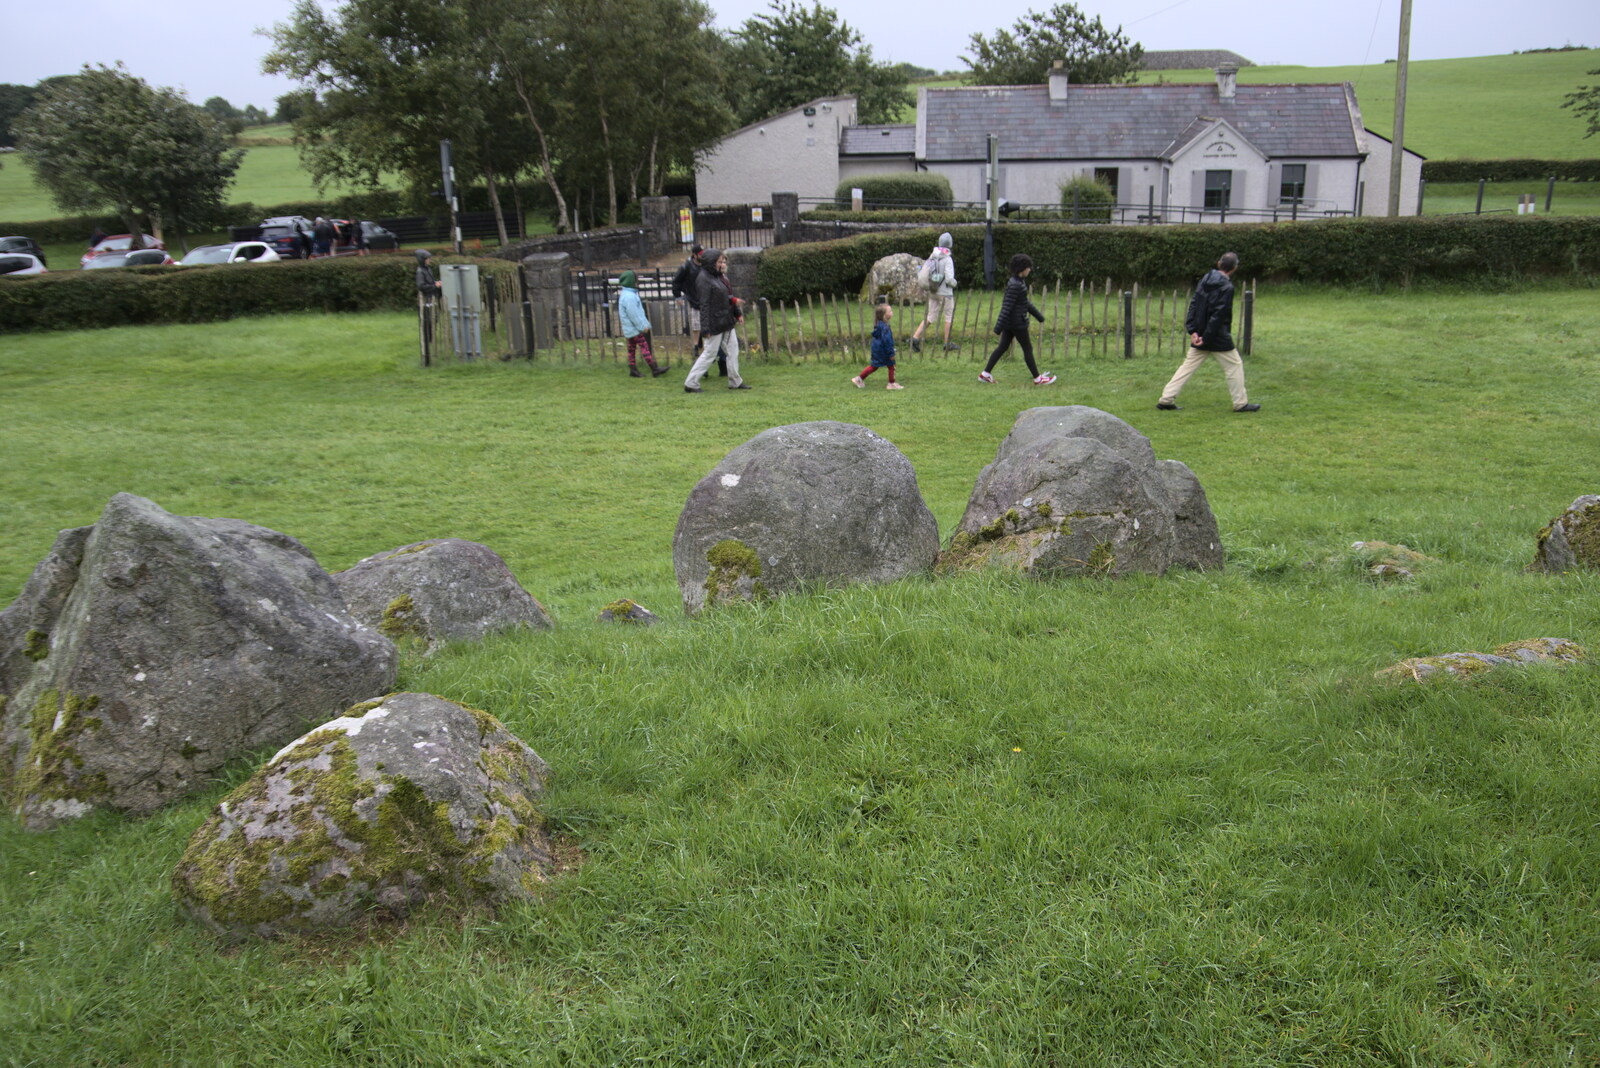 The gang roam around from Walks Around Benbulben and Carrowmore, County Sligo, Ireland - 13th August 2021